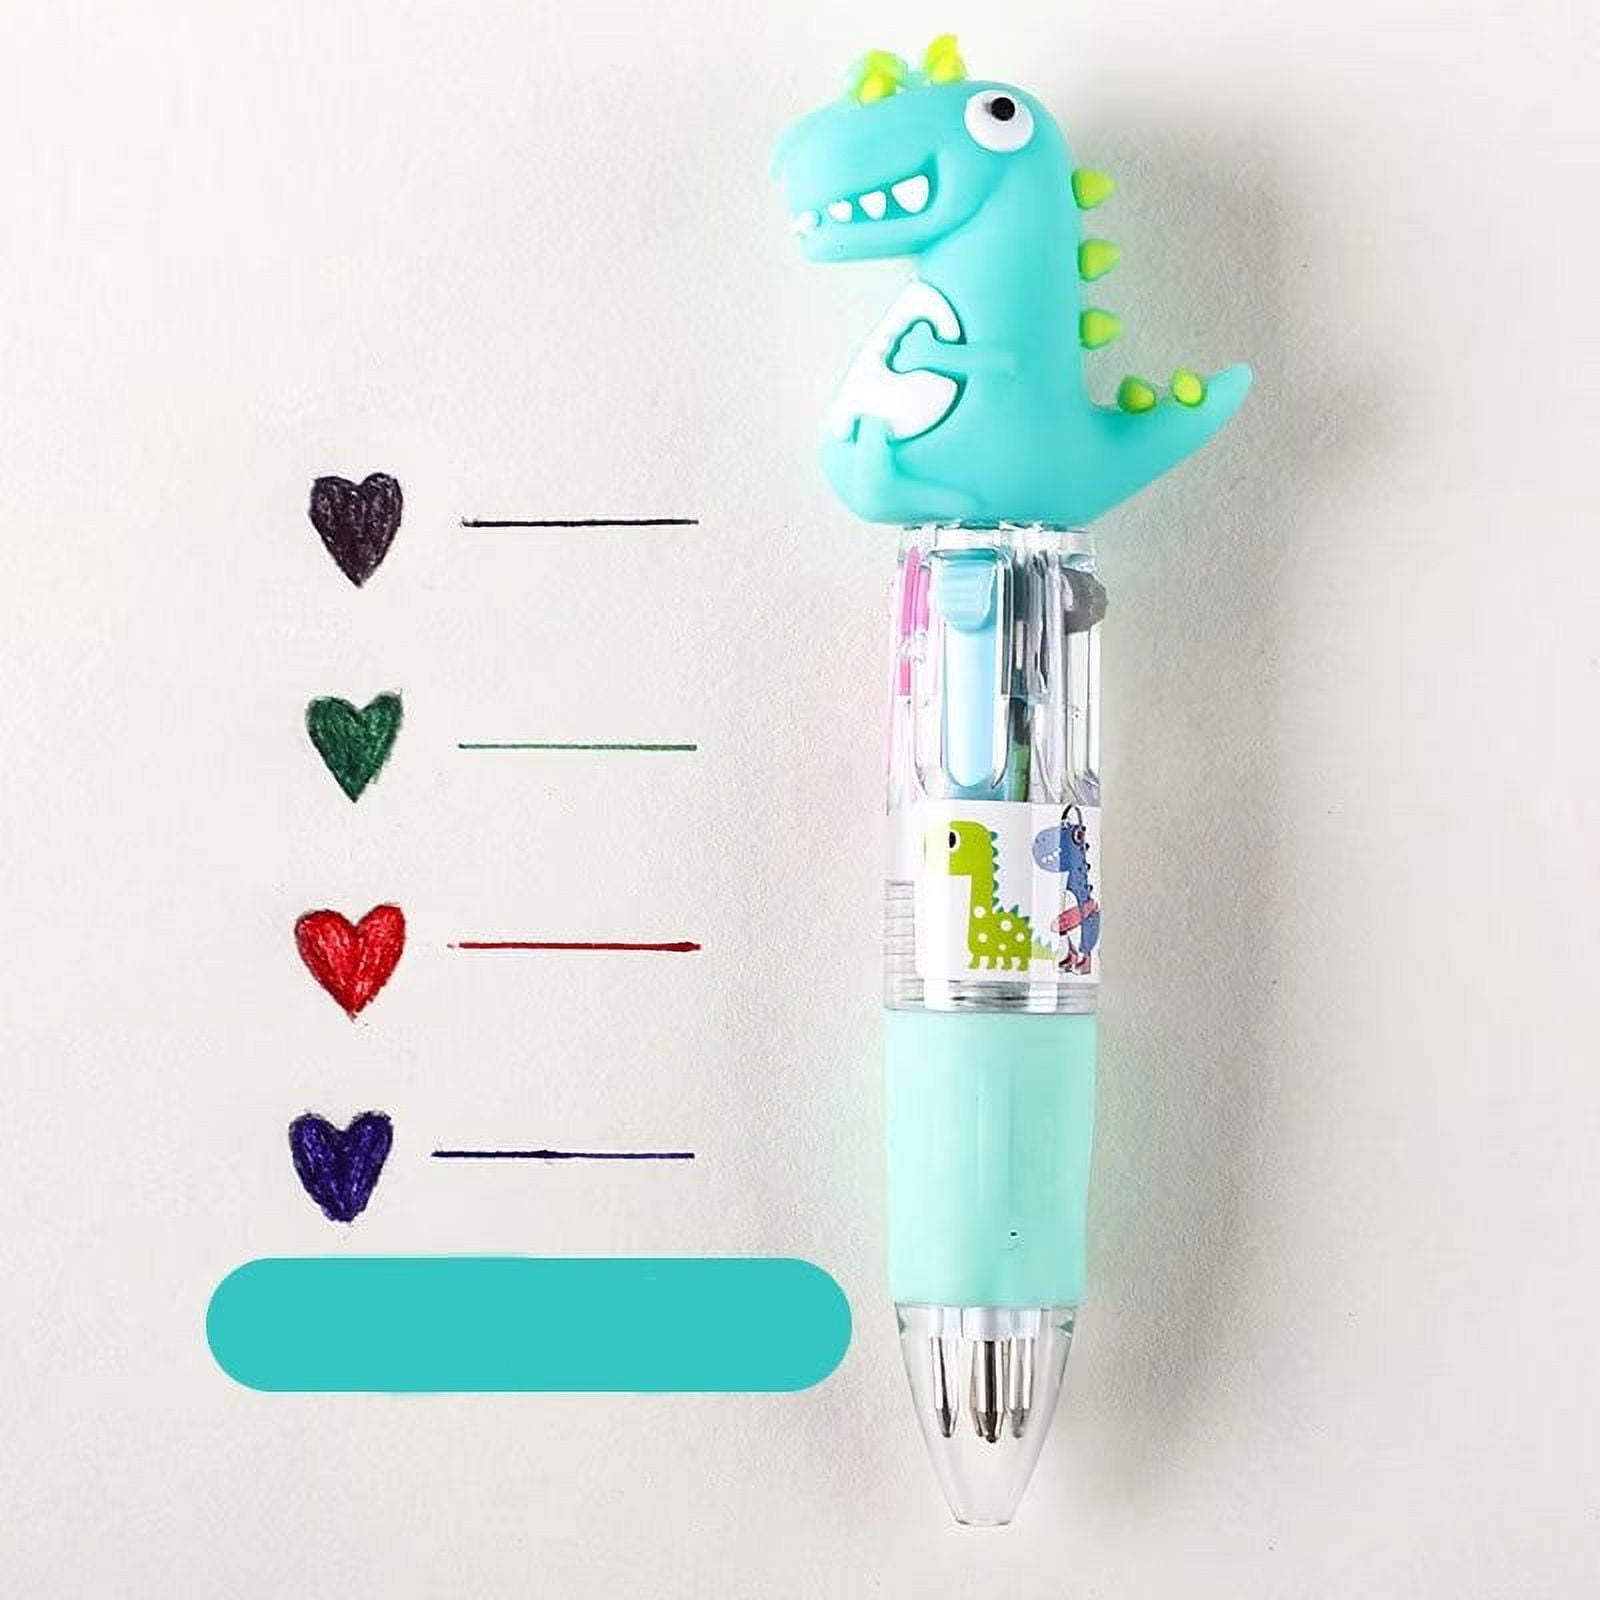 12 PCS Dinosaur Ballpoint Pens, 4-in-1 Retractable gel pens, Cute Mini  Cartoon Pens For kids Women Adults Teens, Multicolor Pens for Office School